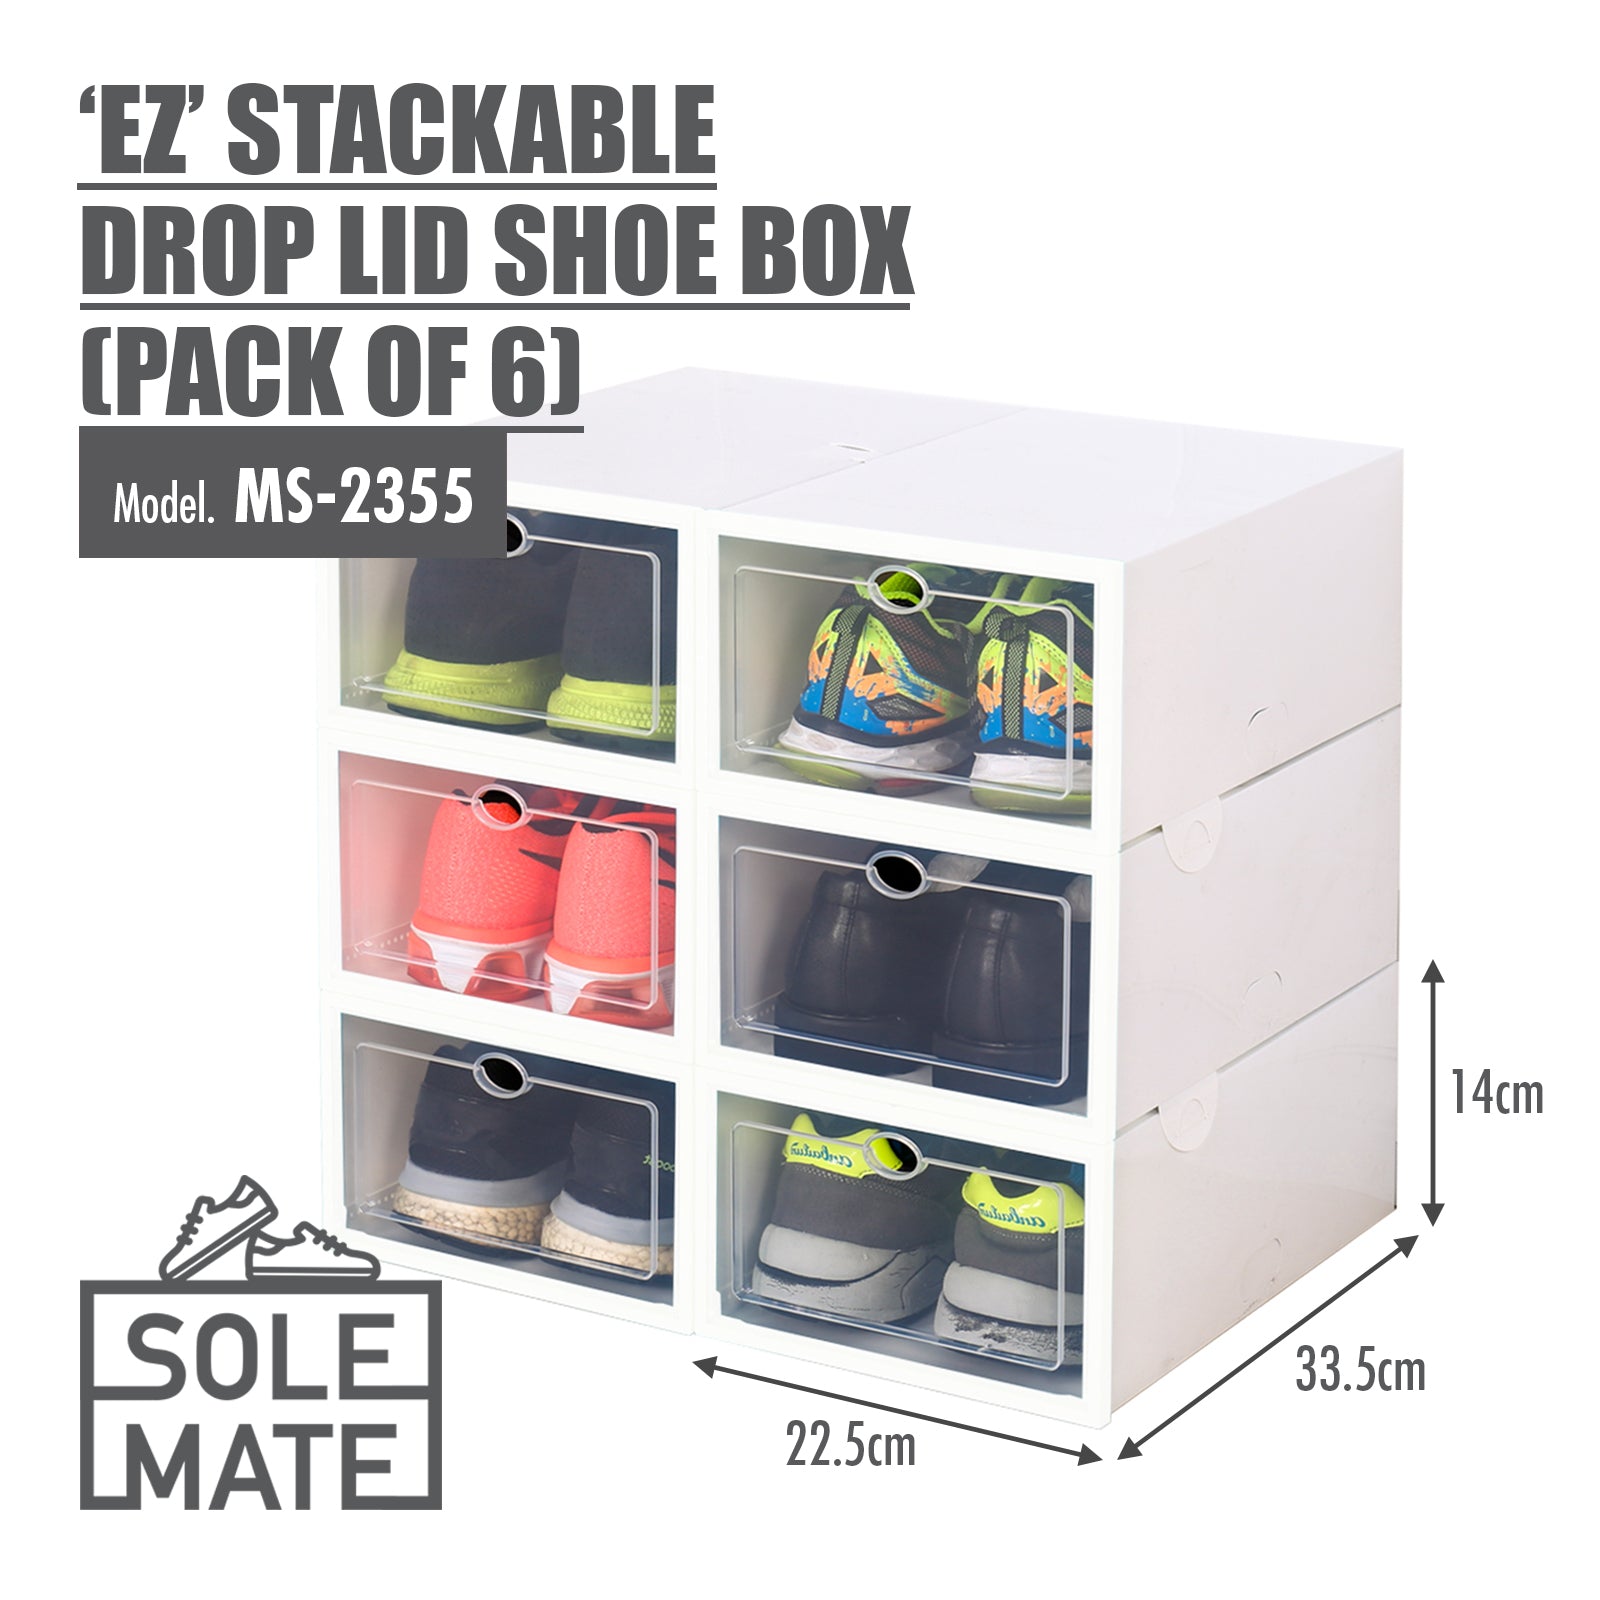 SoleMate - 'EZ' Stackable Drop Lid Shoe Box - Fits: Size 44 (Pack of 6)